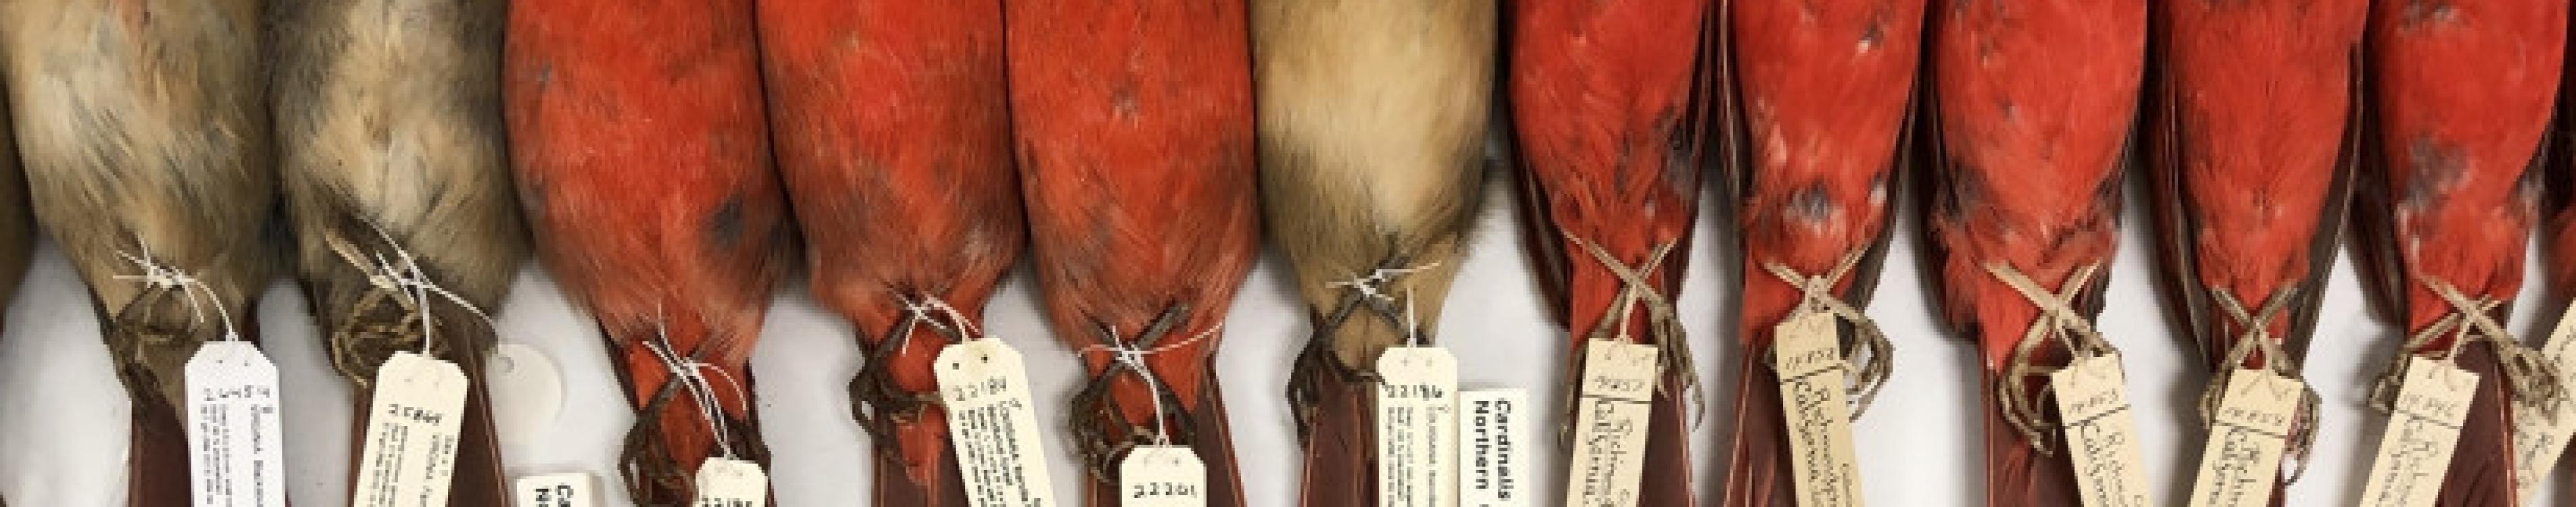 Bird specimens